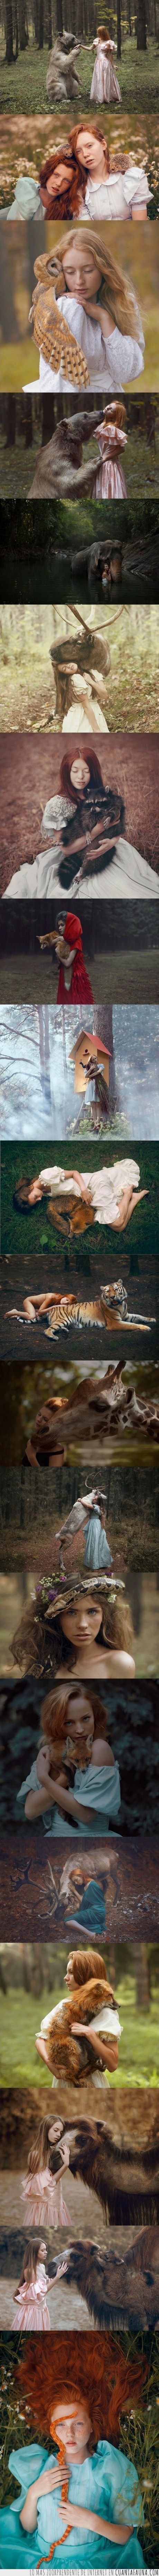 jirafa,zorro,oso,erizo,tigre,serpiente,animales,mujer,foto,están geniales,fotografa Katerina Plotnikova